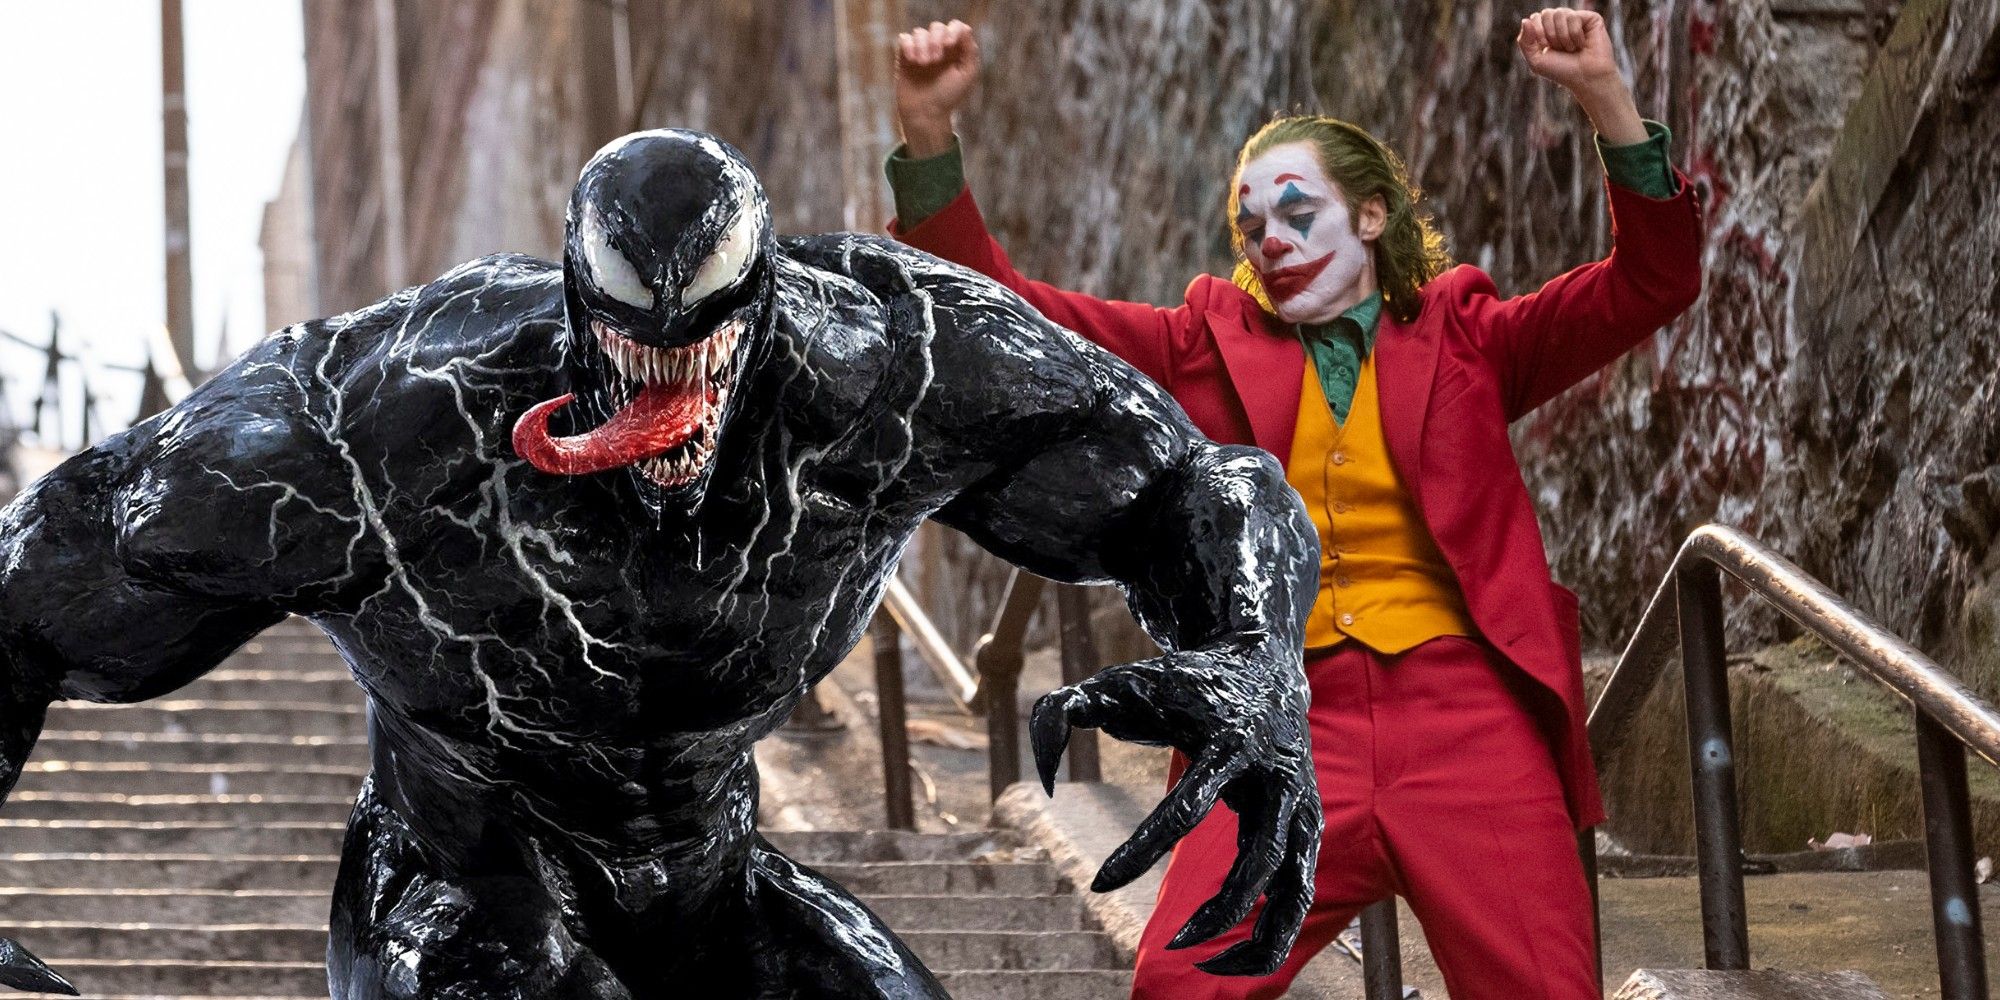 Venom and Joker